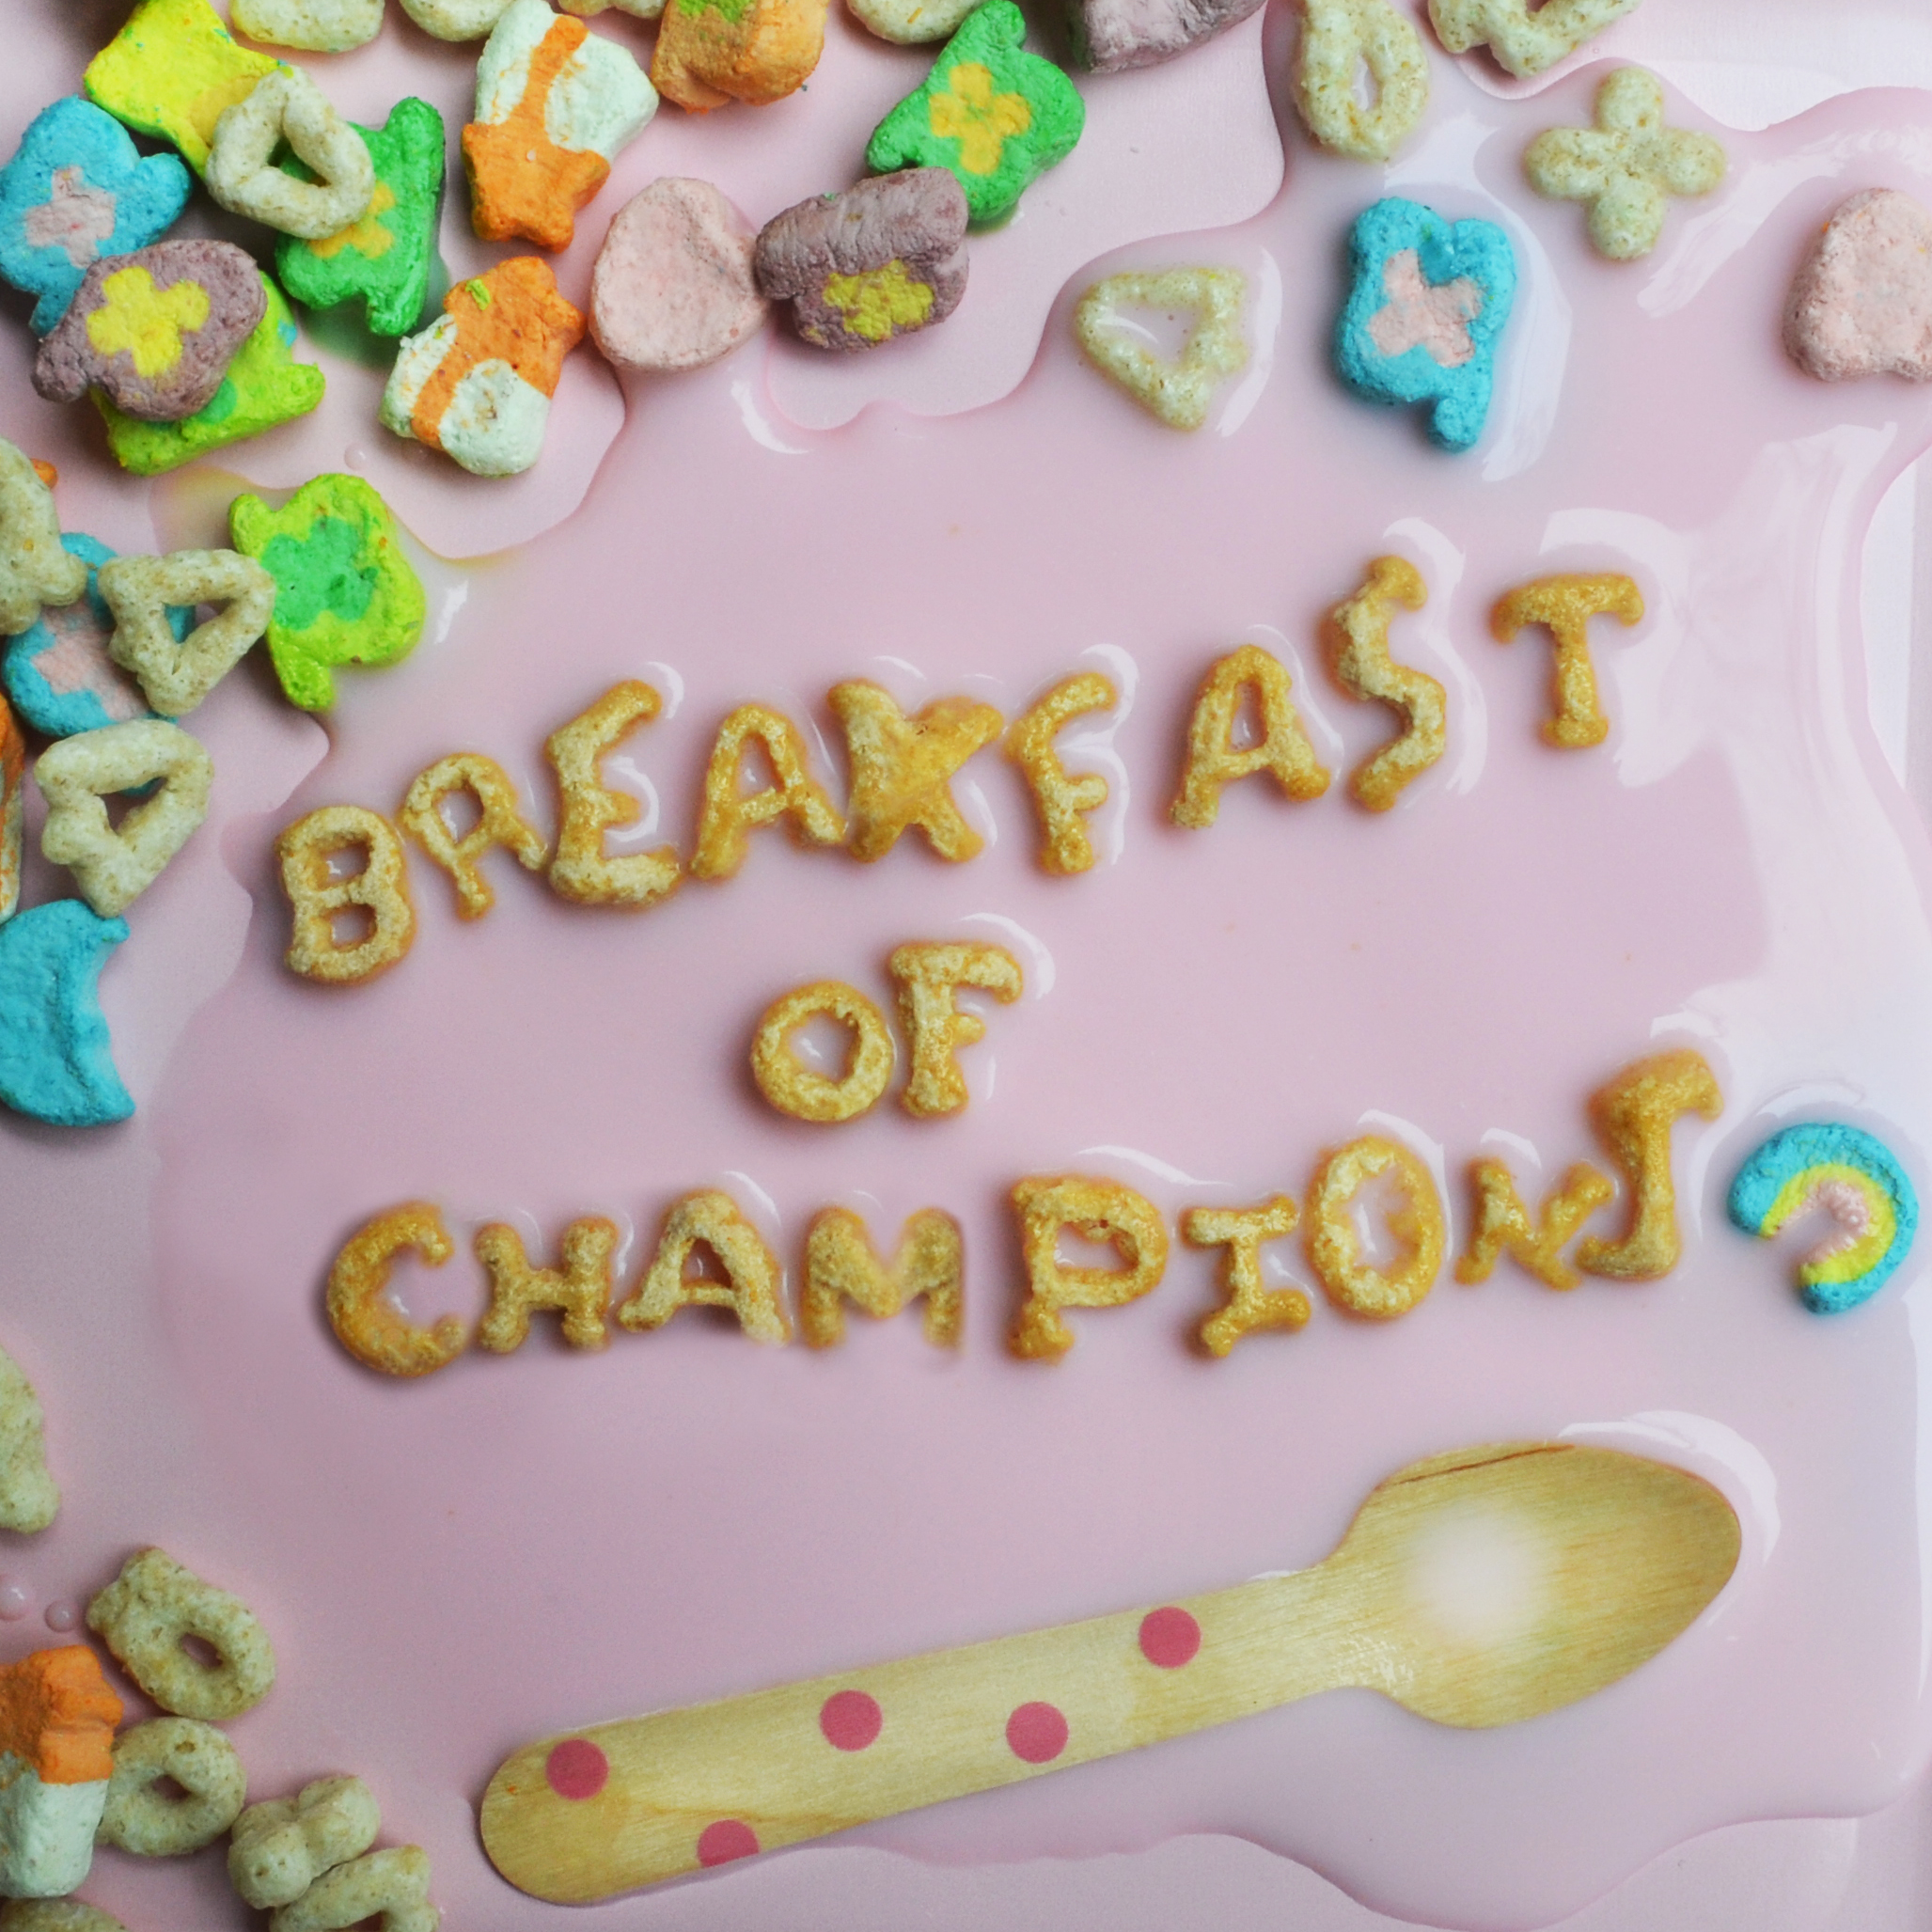 breakfast of champions.jpg